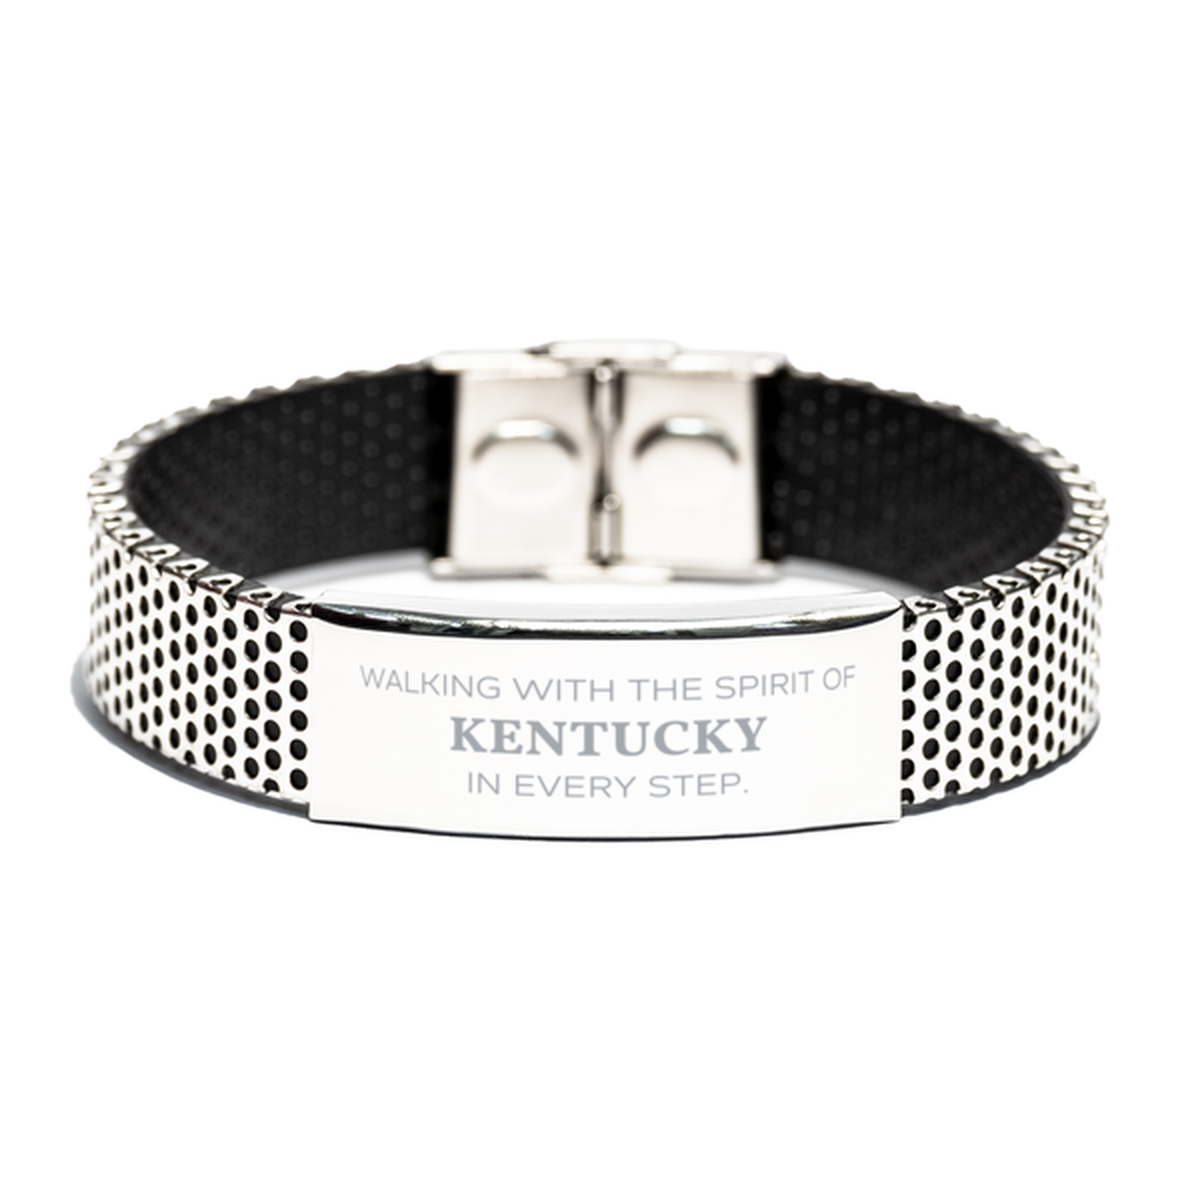 Kentucky Gifts, Walking with the spirit, Love Kentucky Birthday Christmas Stainless Steel Bracelet For Kentucky People, Men, Women, Friends